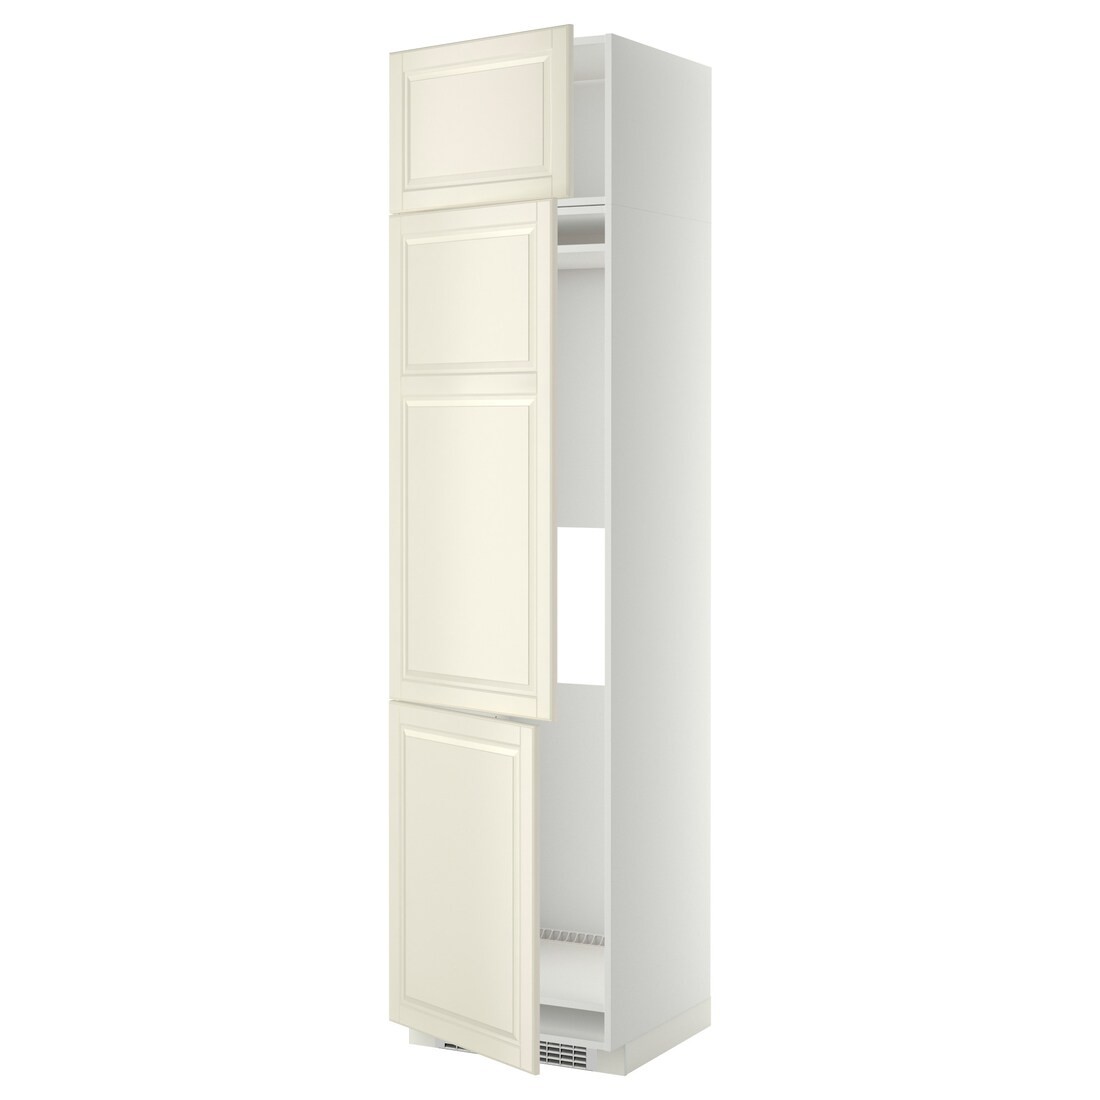 IKEA METOD МЕТОД Высокий шкаф для холодильника / морозильника / 3 дверцы, белый / Bodbyn кремовый, 60x60x240 см 59462579 594.625.79